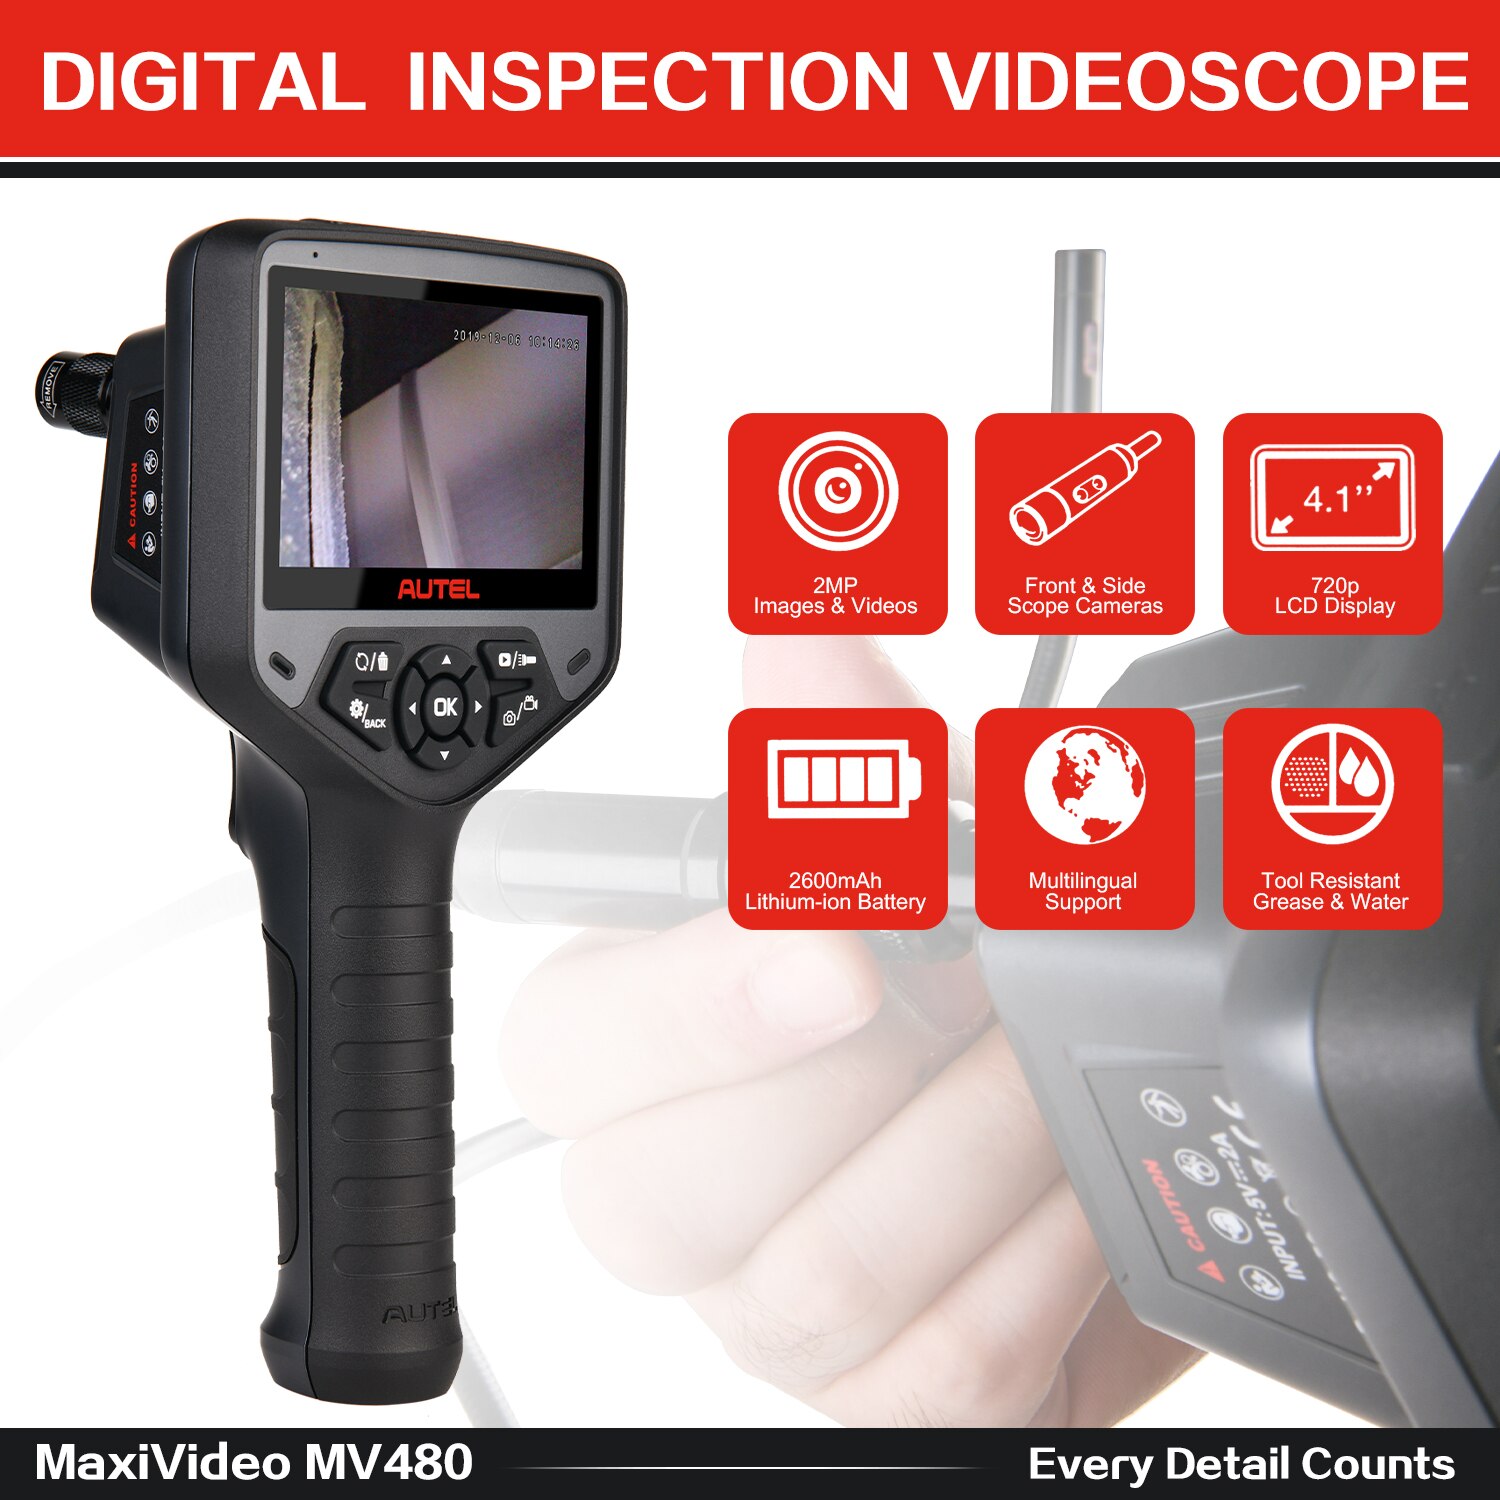 Autel MV480 Industrial Endoscope